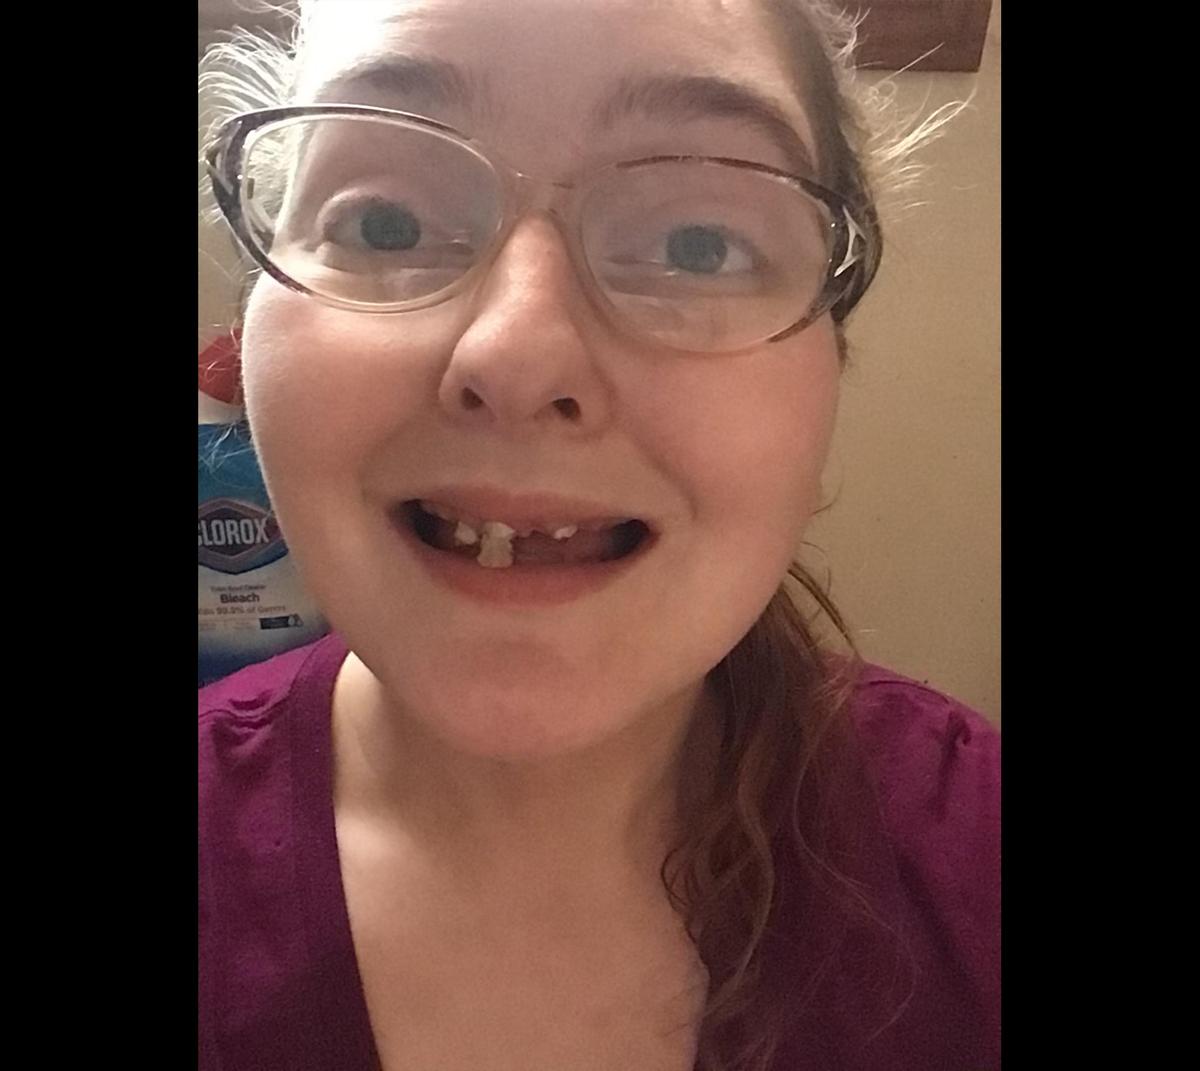 A photo taken around the time of Victoria's procedure, when her font incisor broke (Courtesy of <a href="https://www.facebook.com/victoria.nowakowskishaniqua">Victoria Irene Nowakowski</a>)